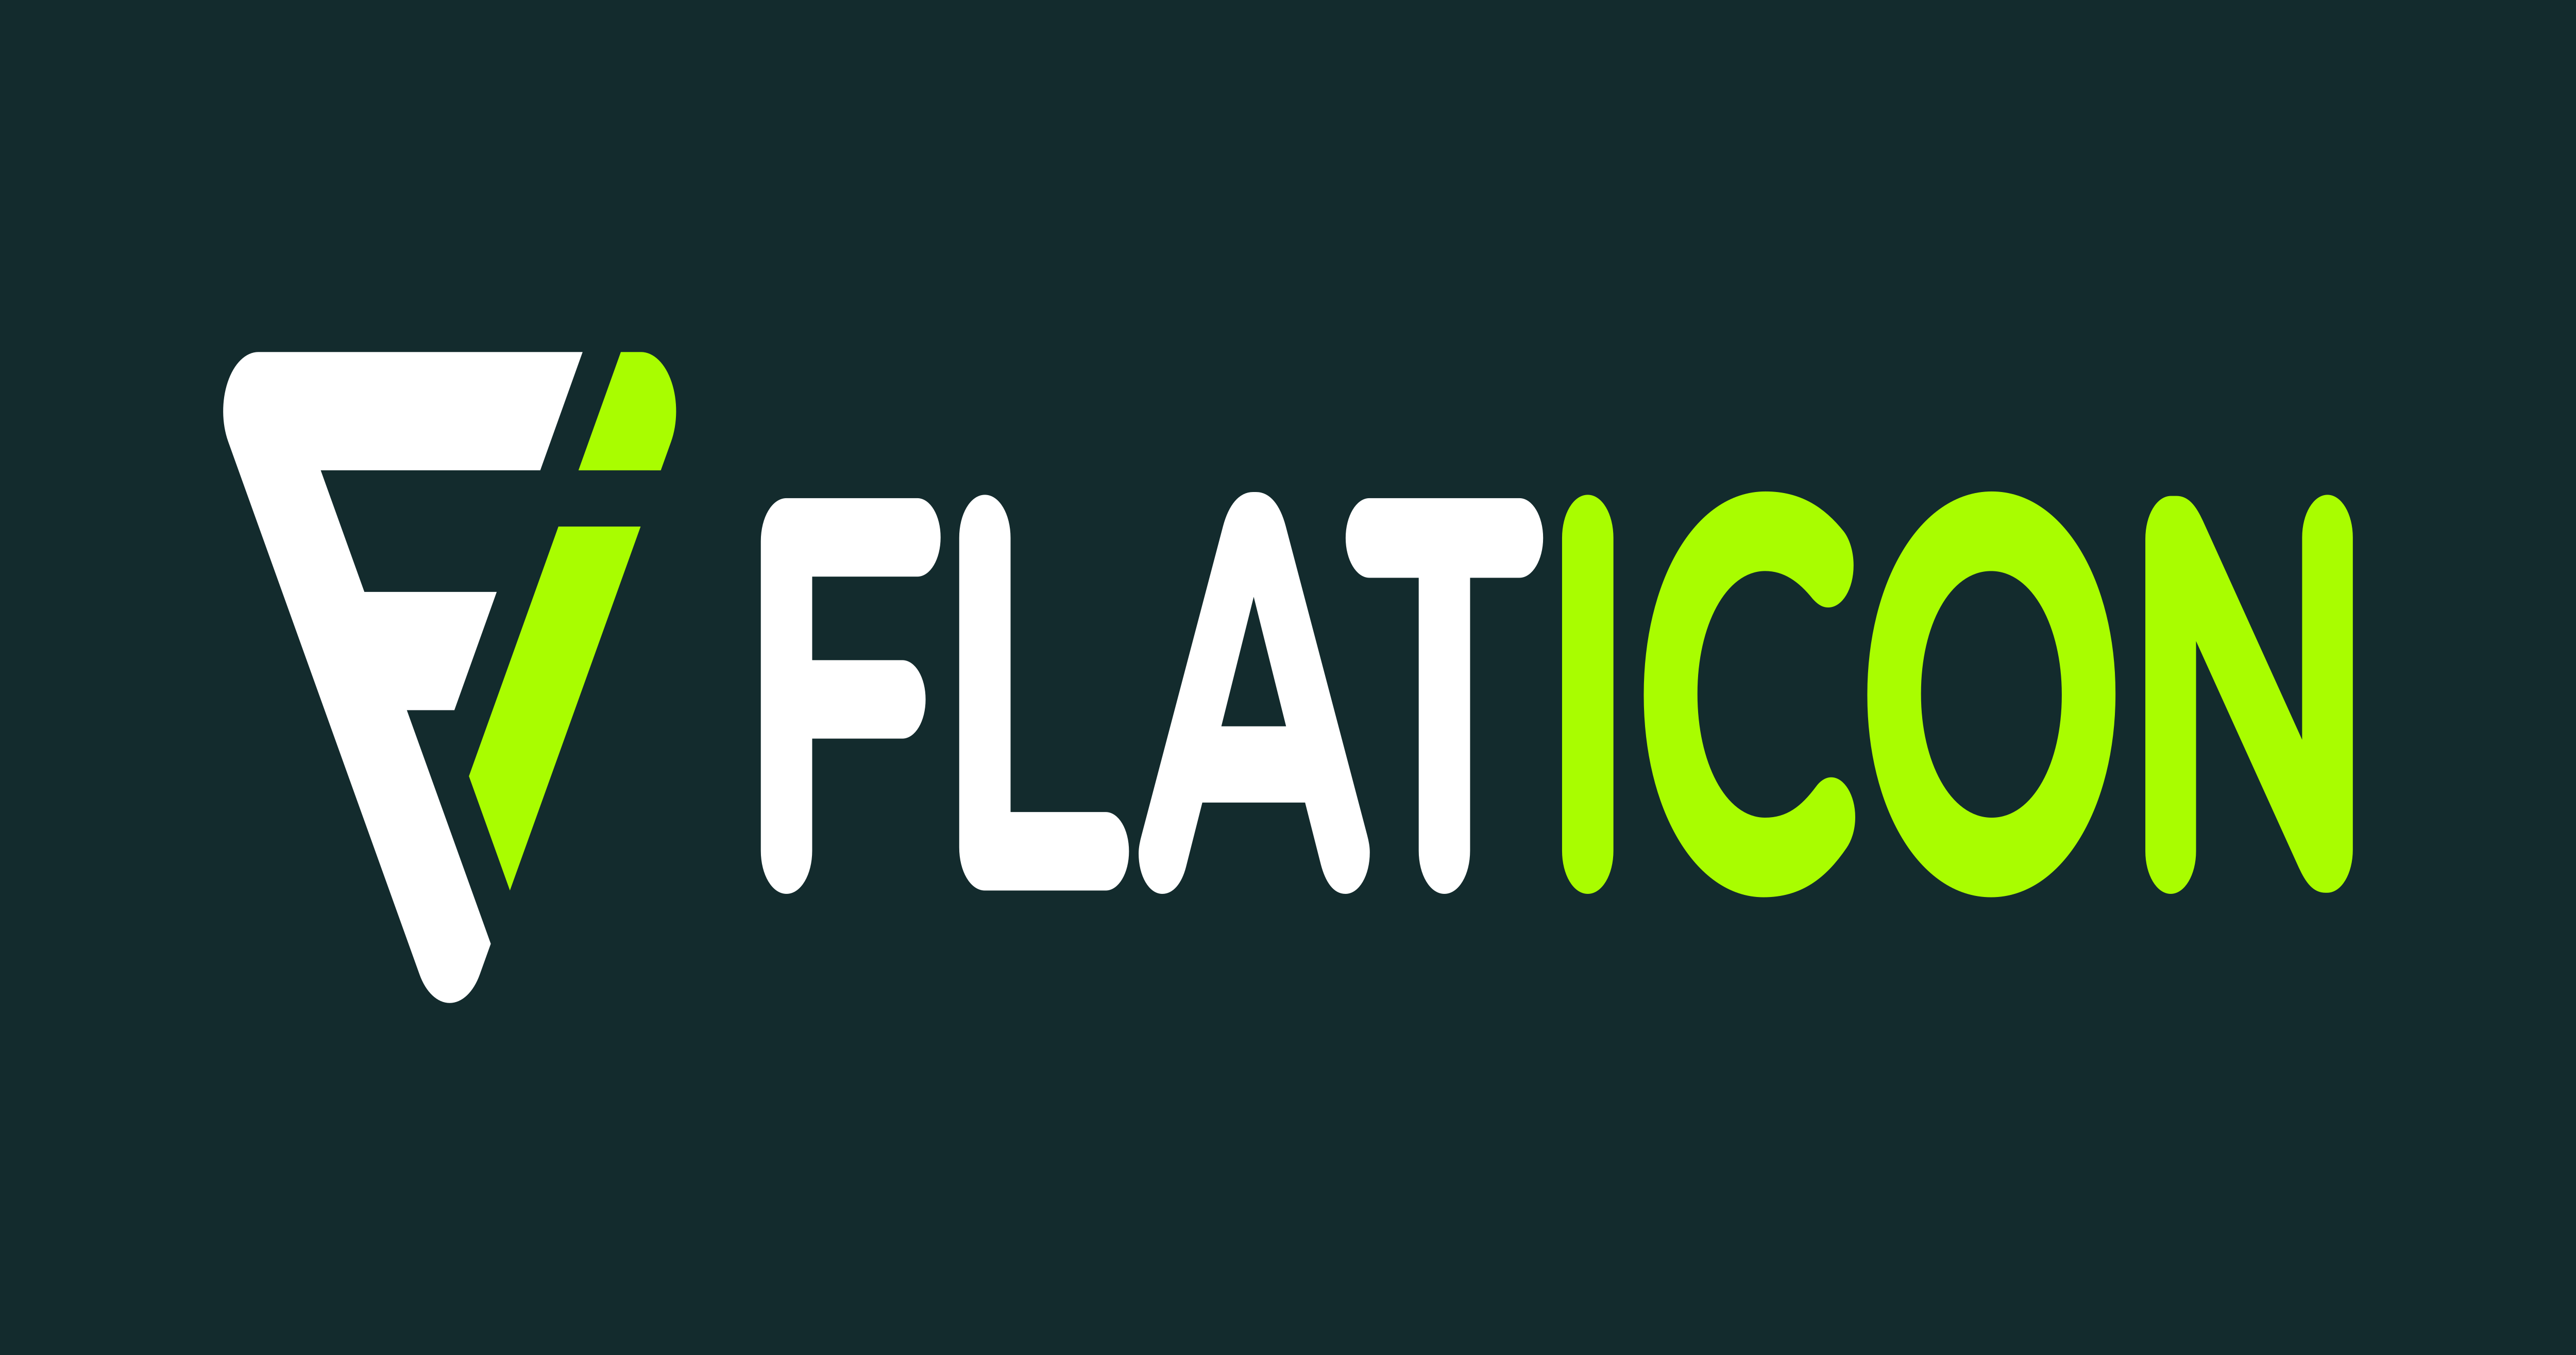 flaticon updates